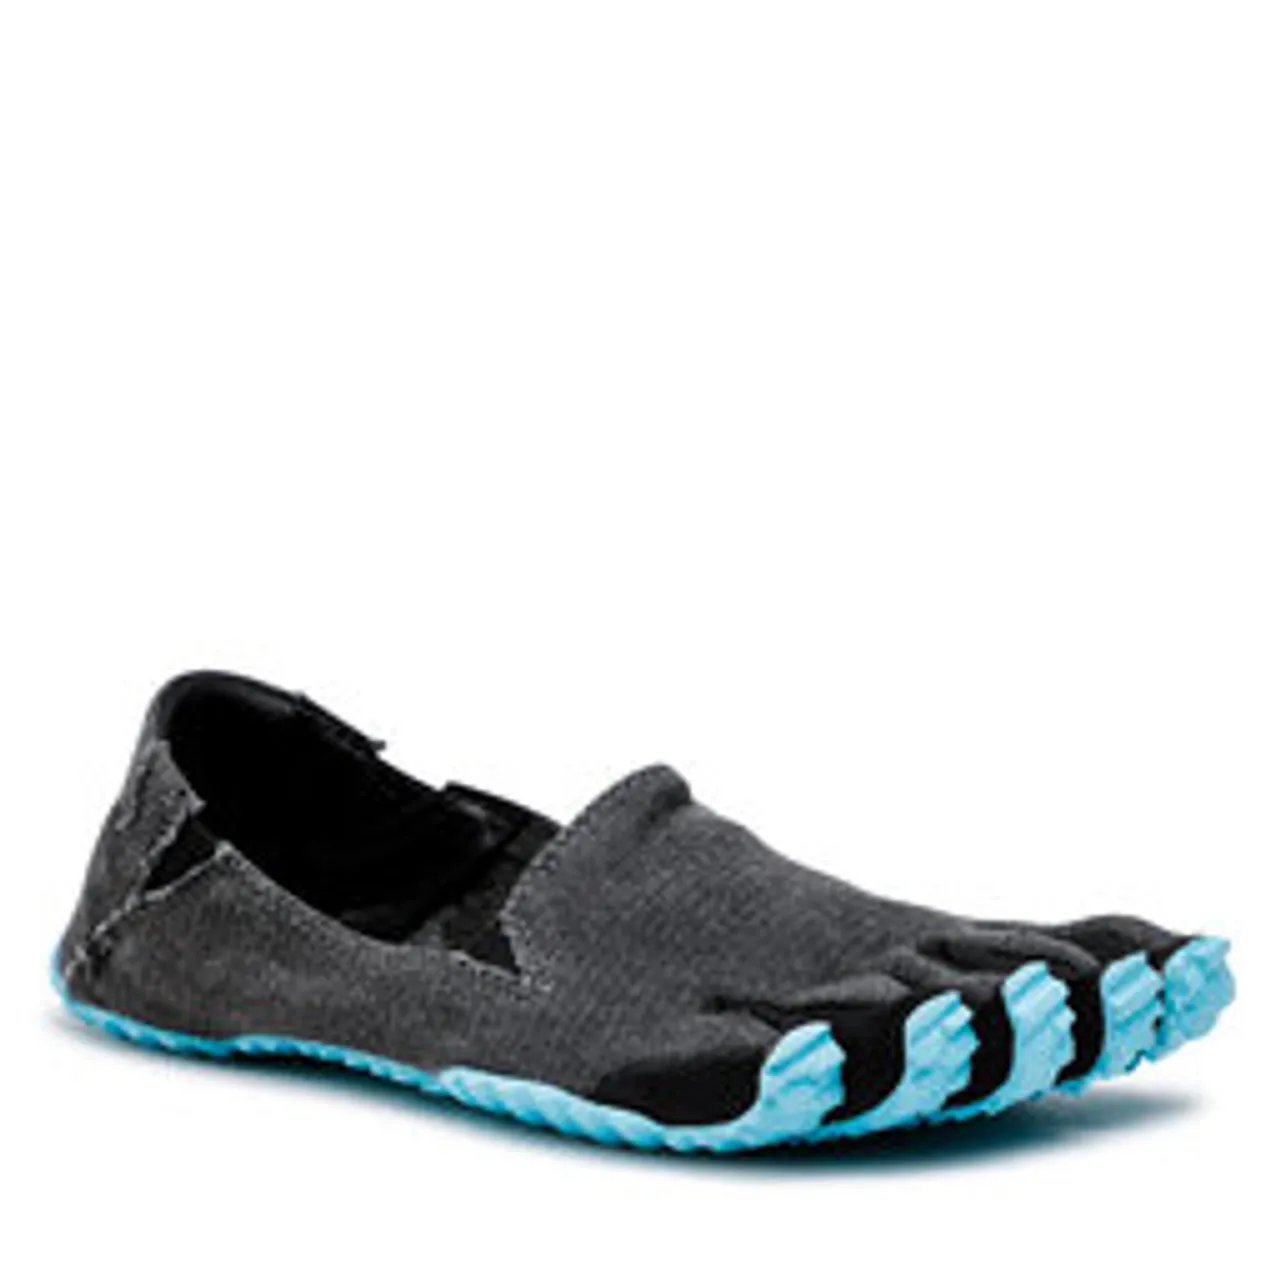 Schuhe Vibram Fivefingers Cvt Lb 21W9901 Grey/Light Blue